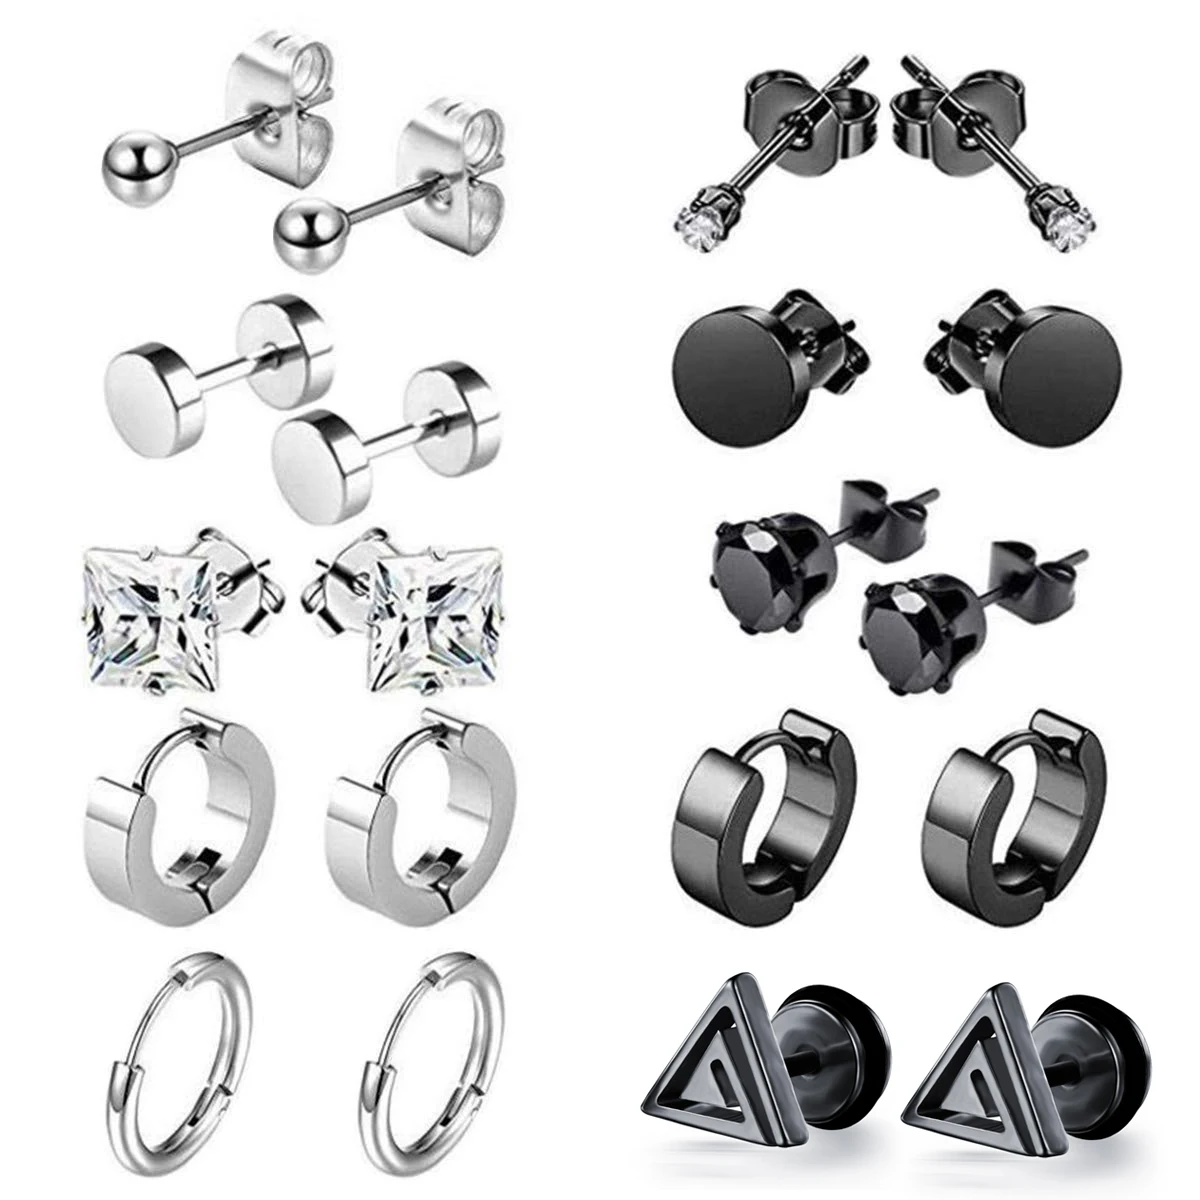 

10 Pairs Stainless Steel Earrings for Men Tiny Ball CZ Stud Earrings Cartilage Earrings Endless Earrings for Men Women